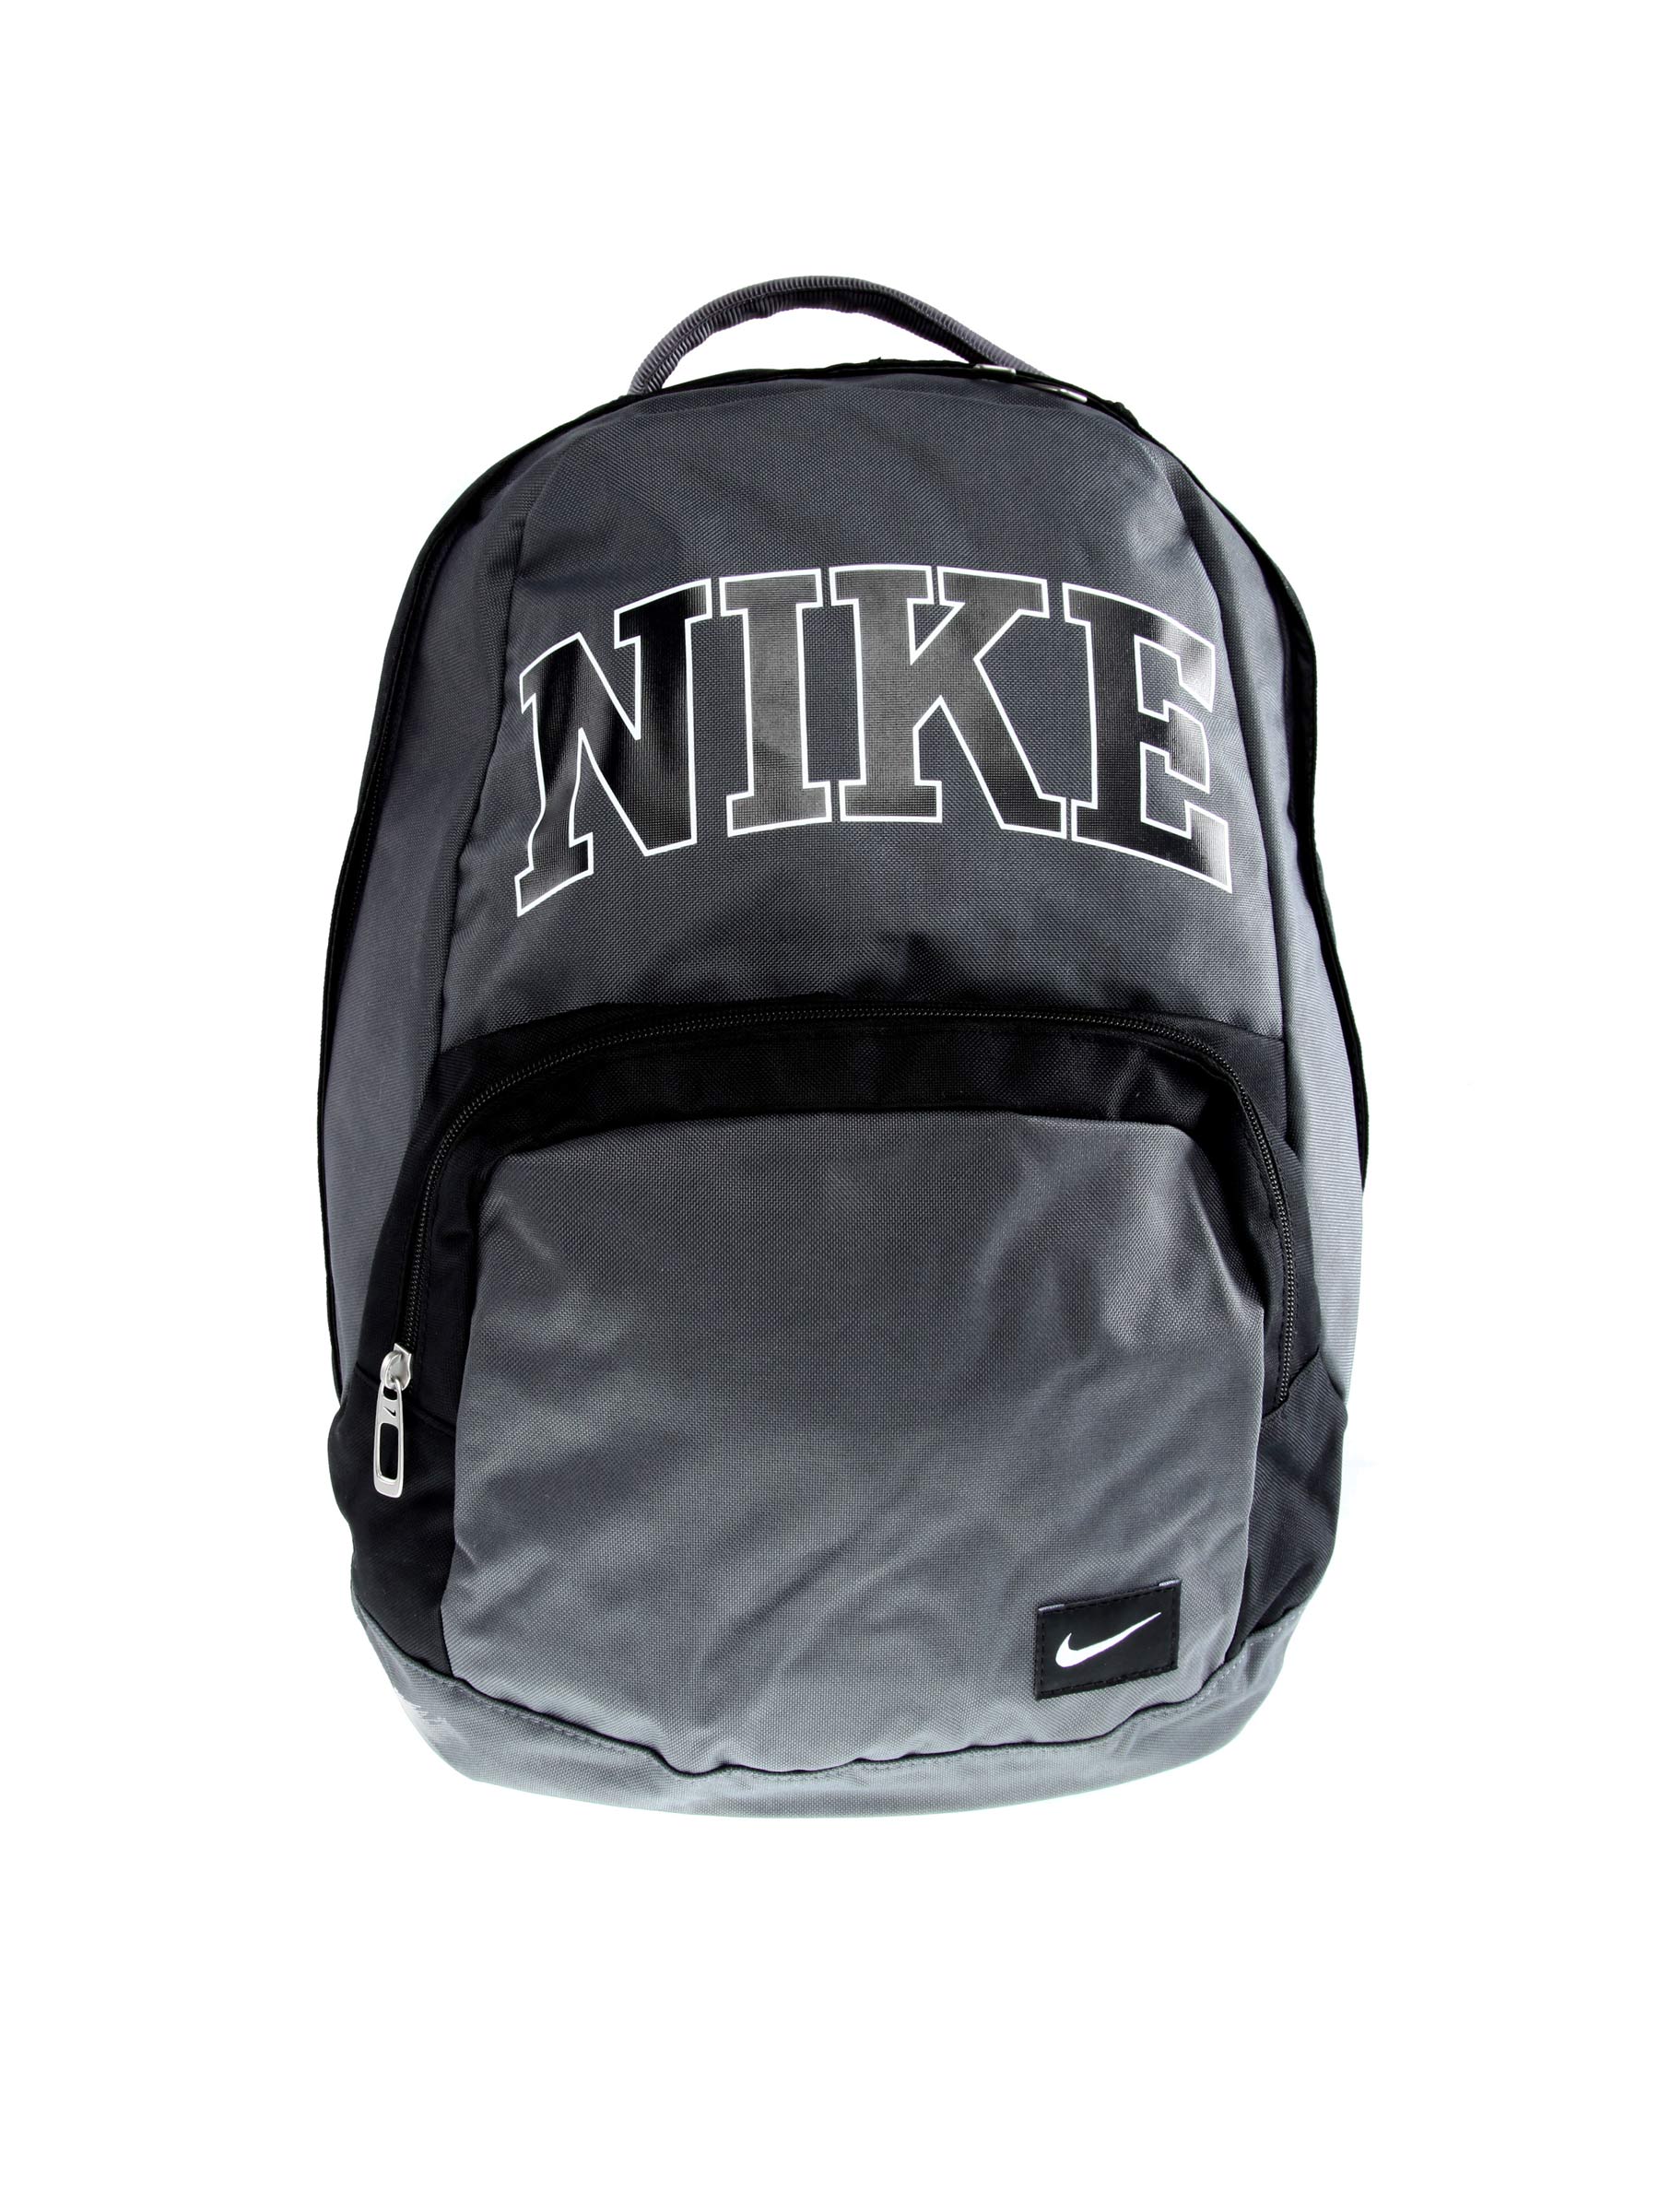 Nike Unisex Grey & Black Backpack